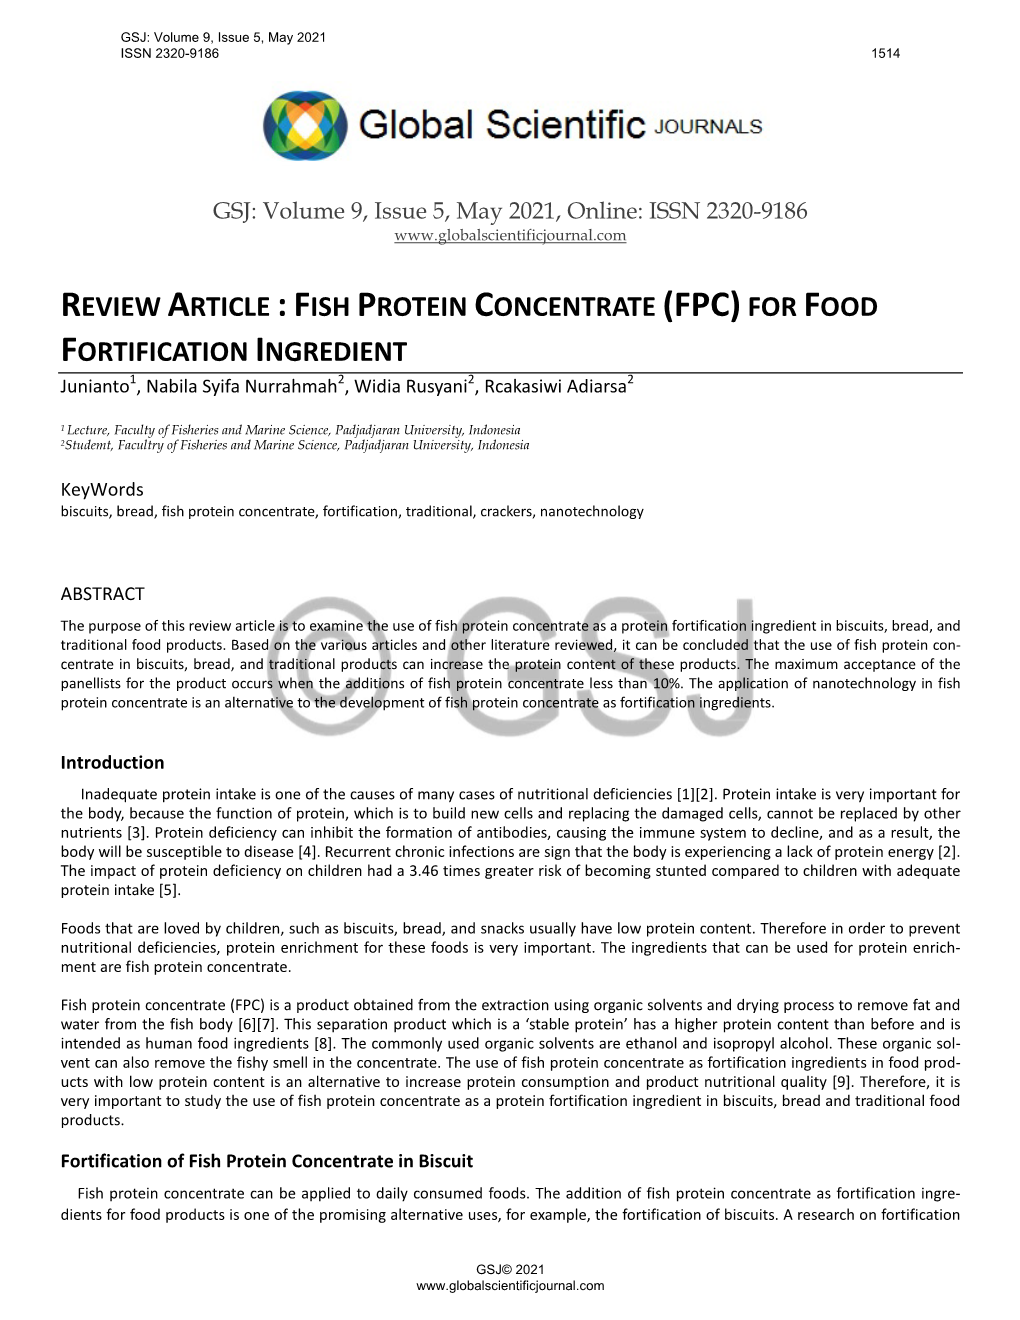 FISH PROTEIN CONCENTRATE (FPC) for FOOD FORTIFICATION INGREDIENT Junianto1, Nabila Syifa Nurrahmah2, Widia Rusyani2, Rcakasiwi Adiarsa2